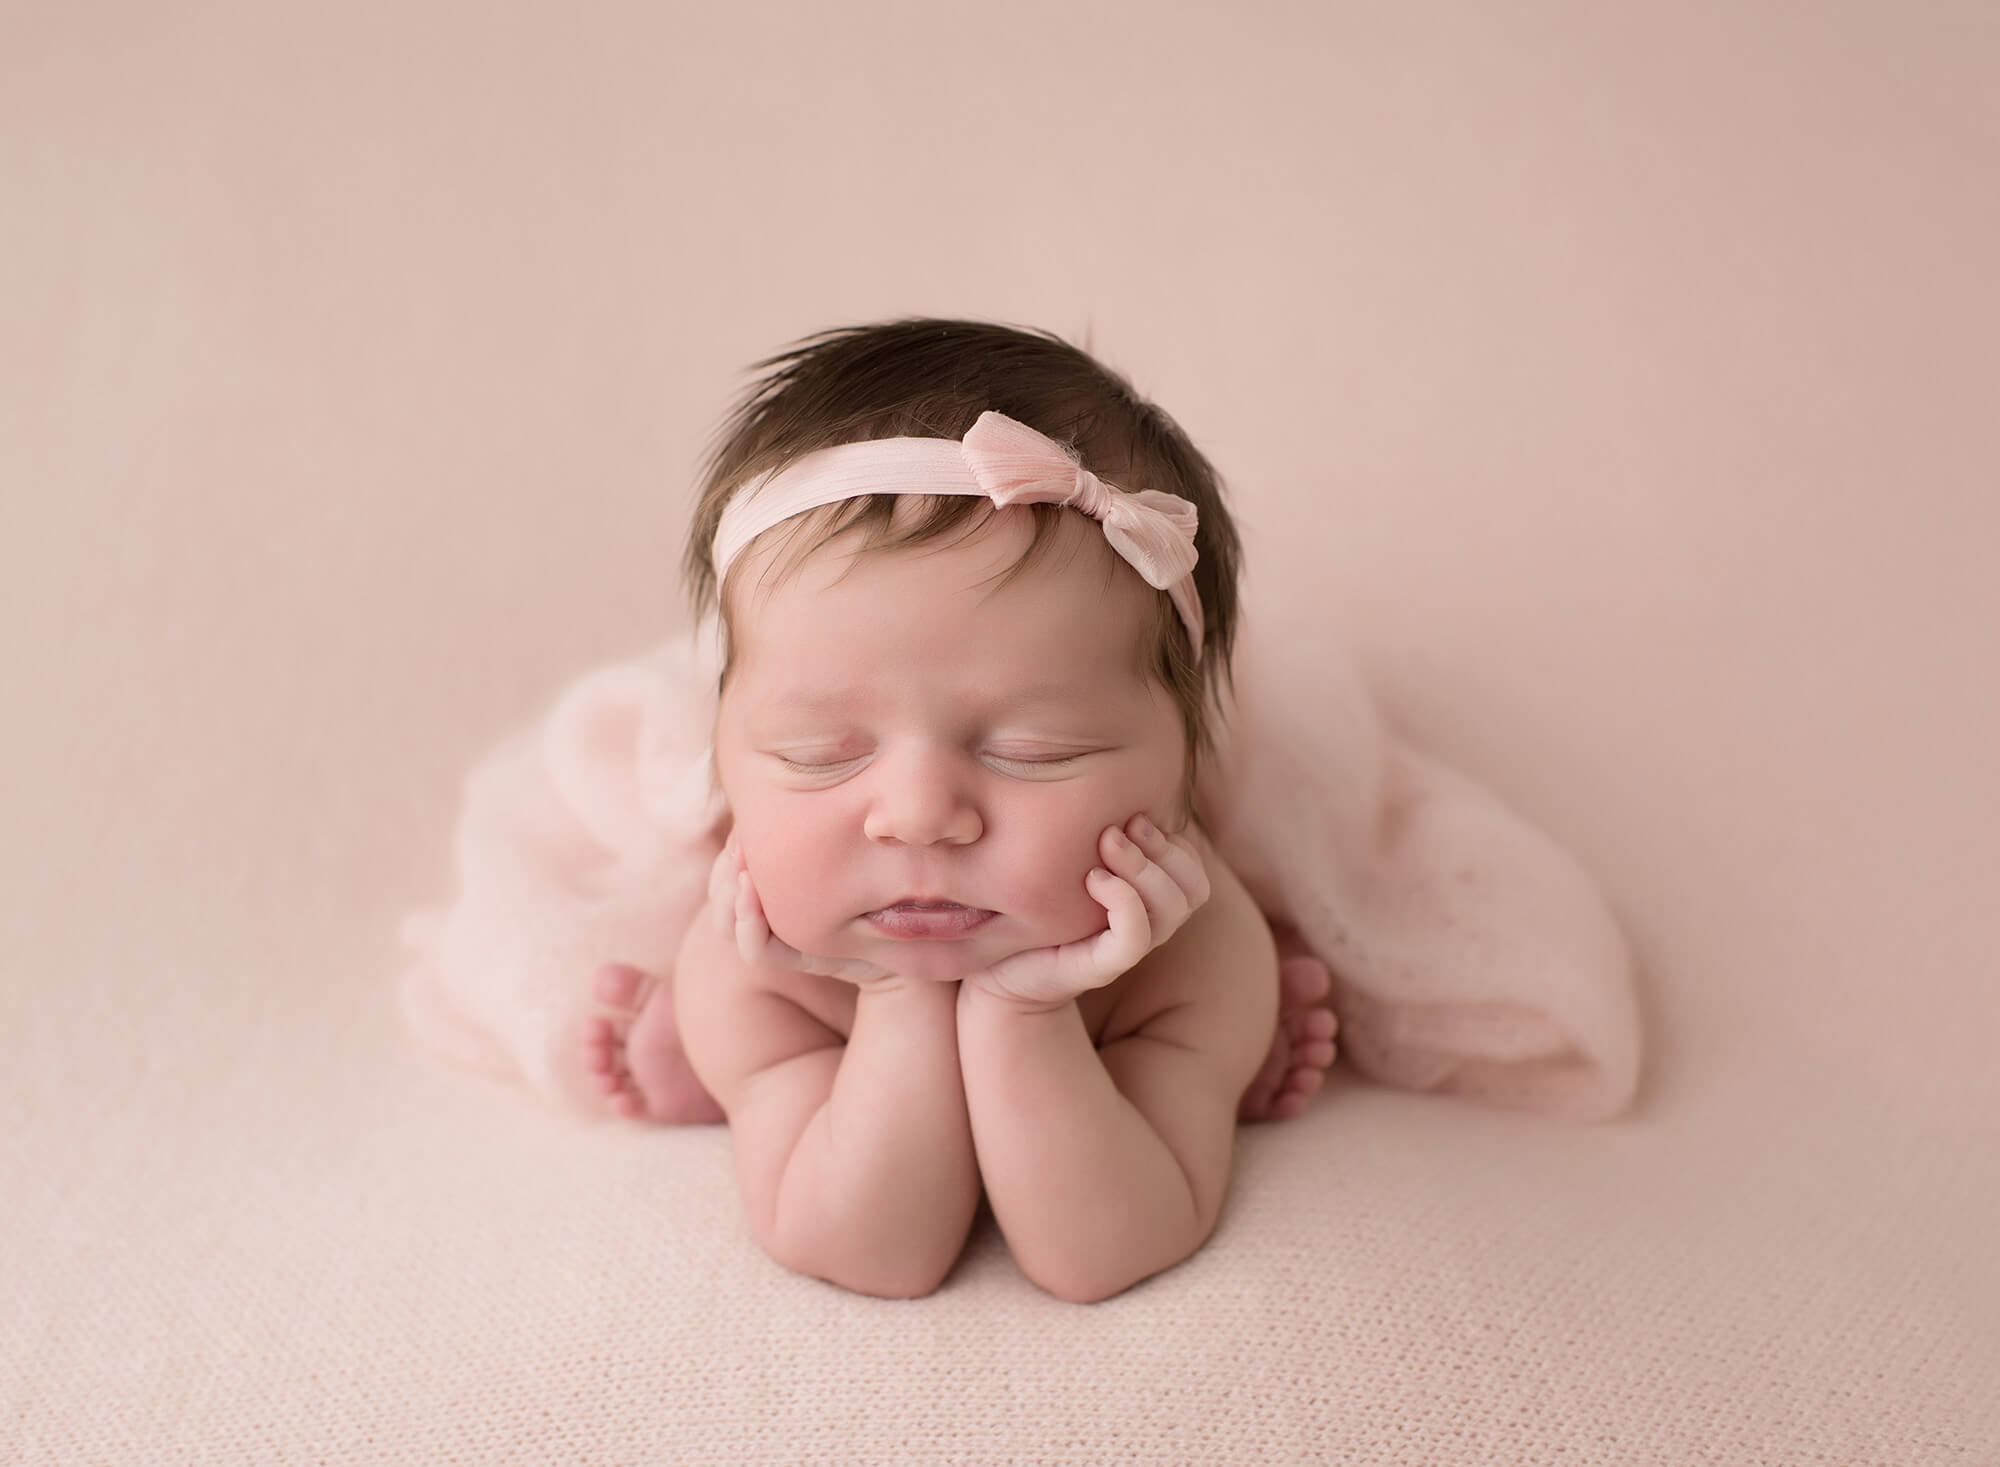 Newborn portrait in studio - Connecticut newborn photographer Melissa Hartigan